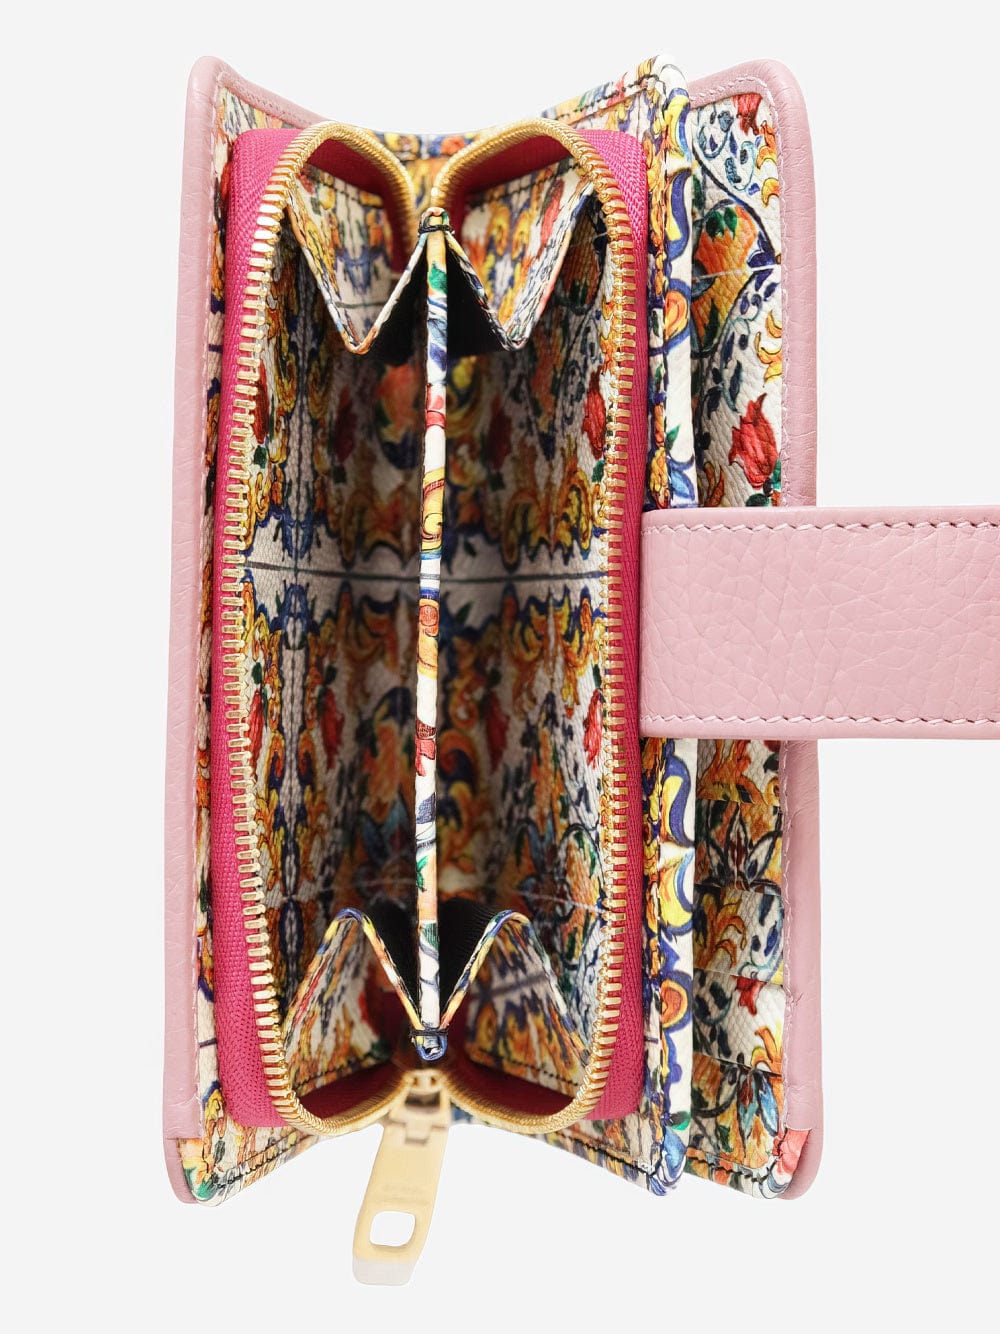 Dolce & Gabbana Leather Bifold Wallet